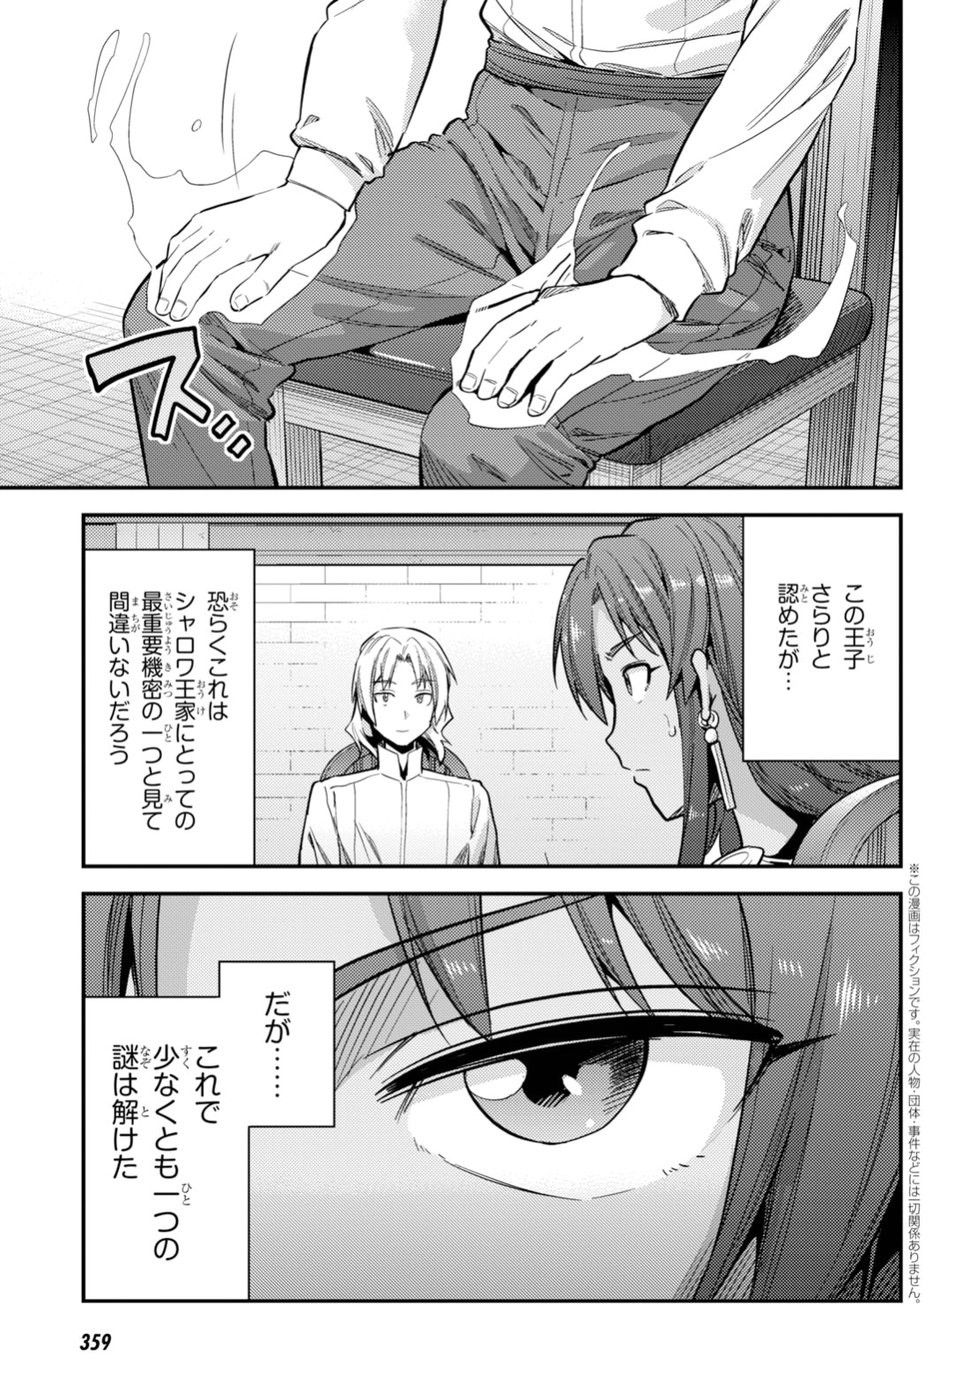 Risou no Himo Seikatsu - Chapter 024 - Page 3